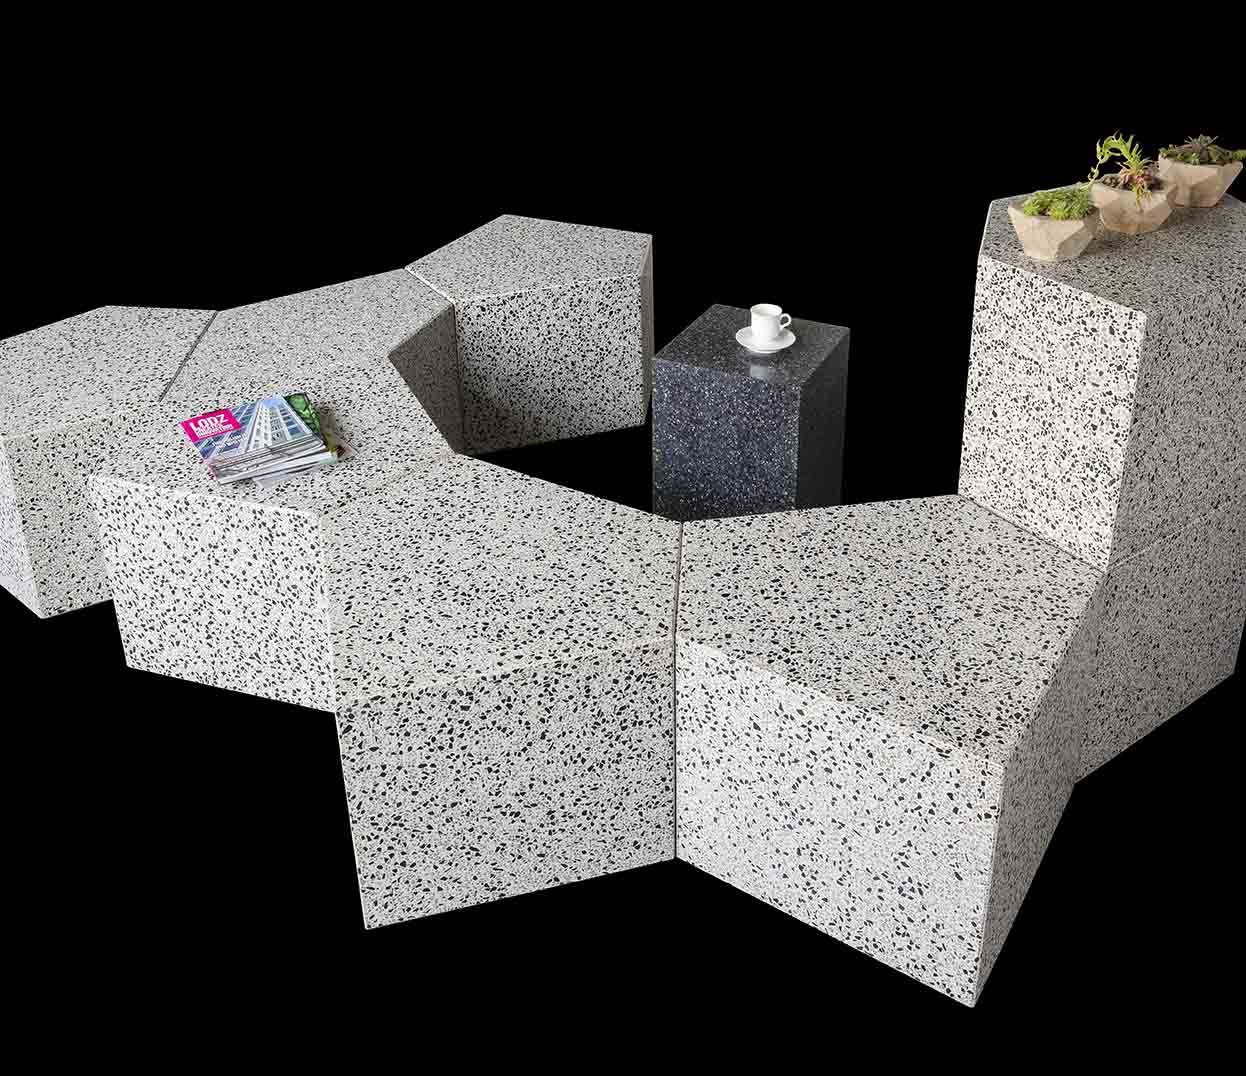 modular objects made of terrazzo